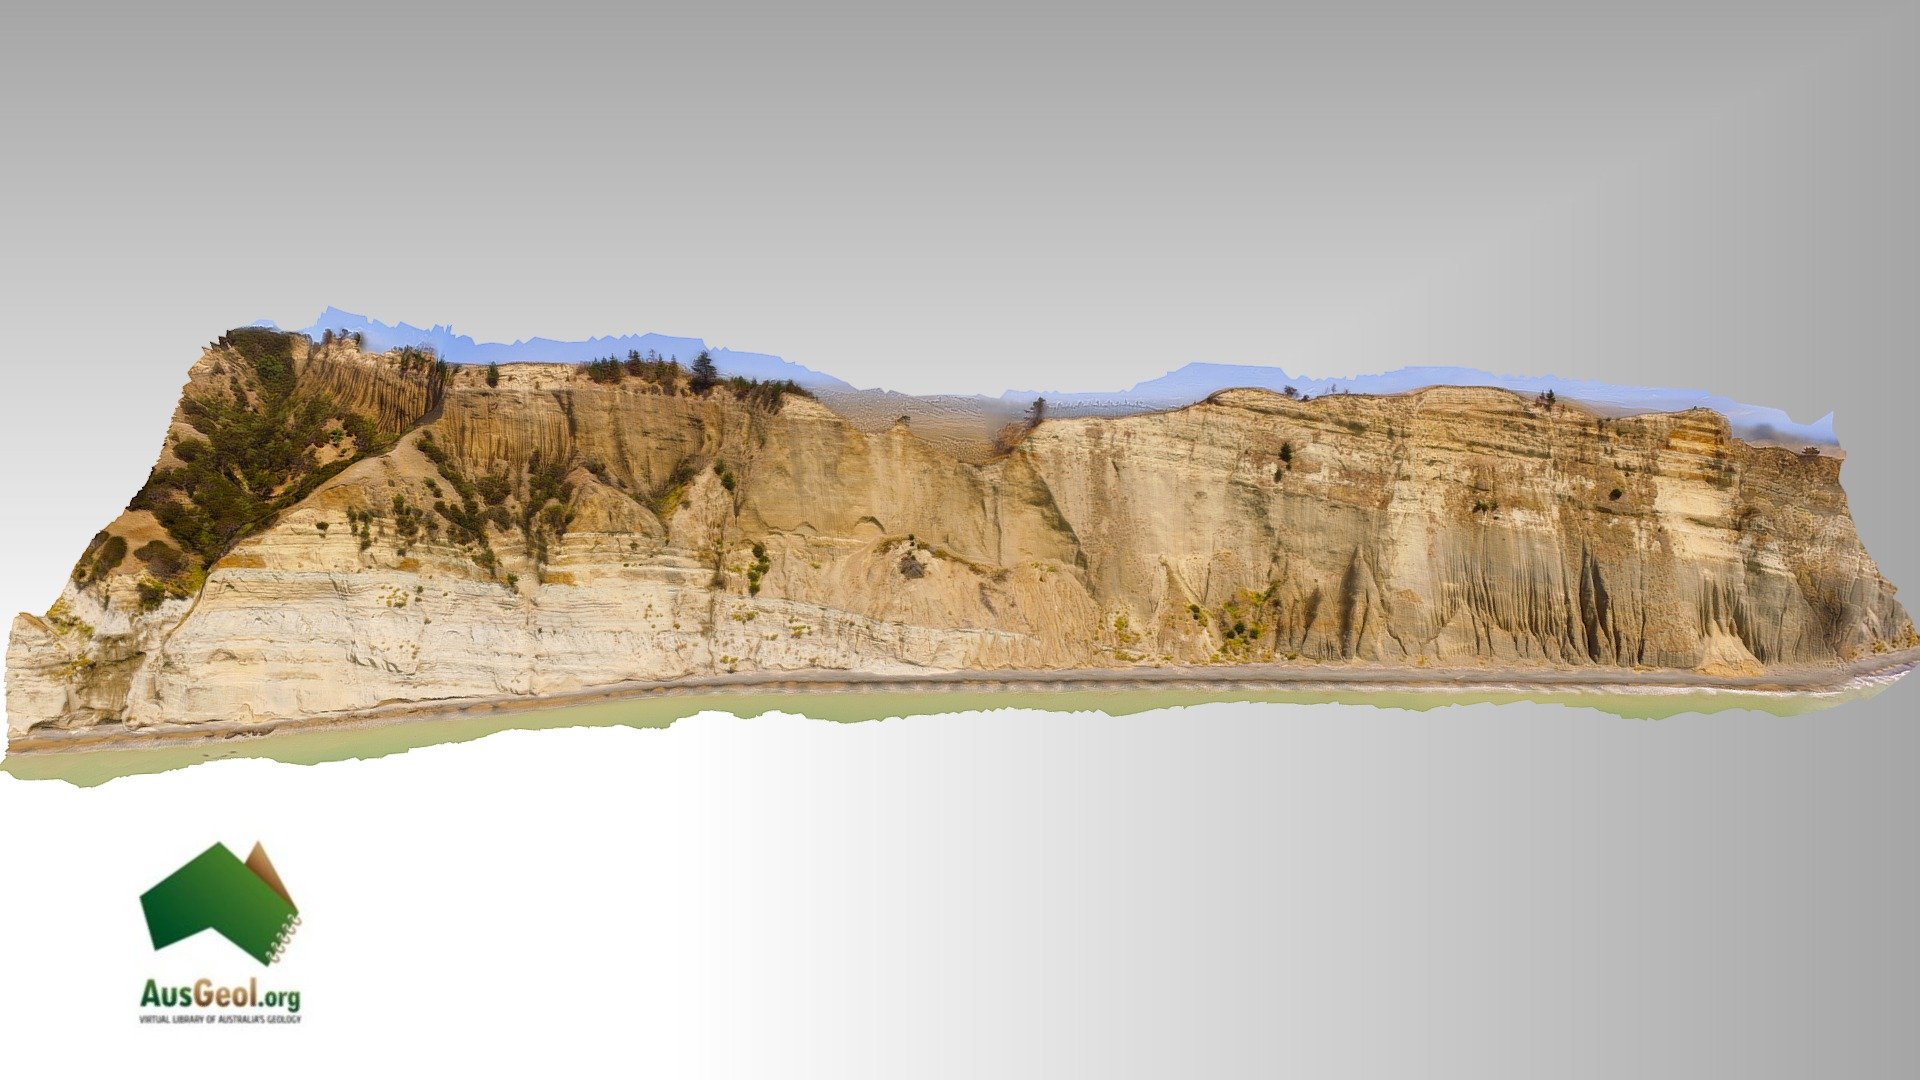 Plio-pleistocene sediments and felsic tuffaceous layers, Kape Kidnappers, North Island, New Zealand - KidnappersUAV3 - 3D model by AusGeol.org (@AusGeol) 3d model